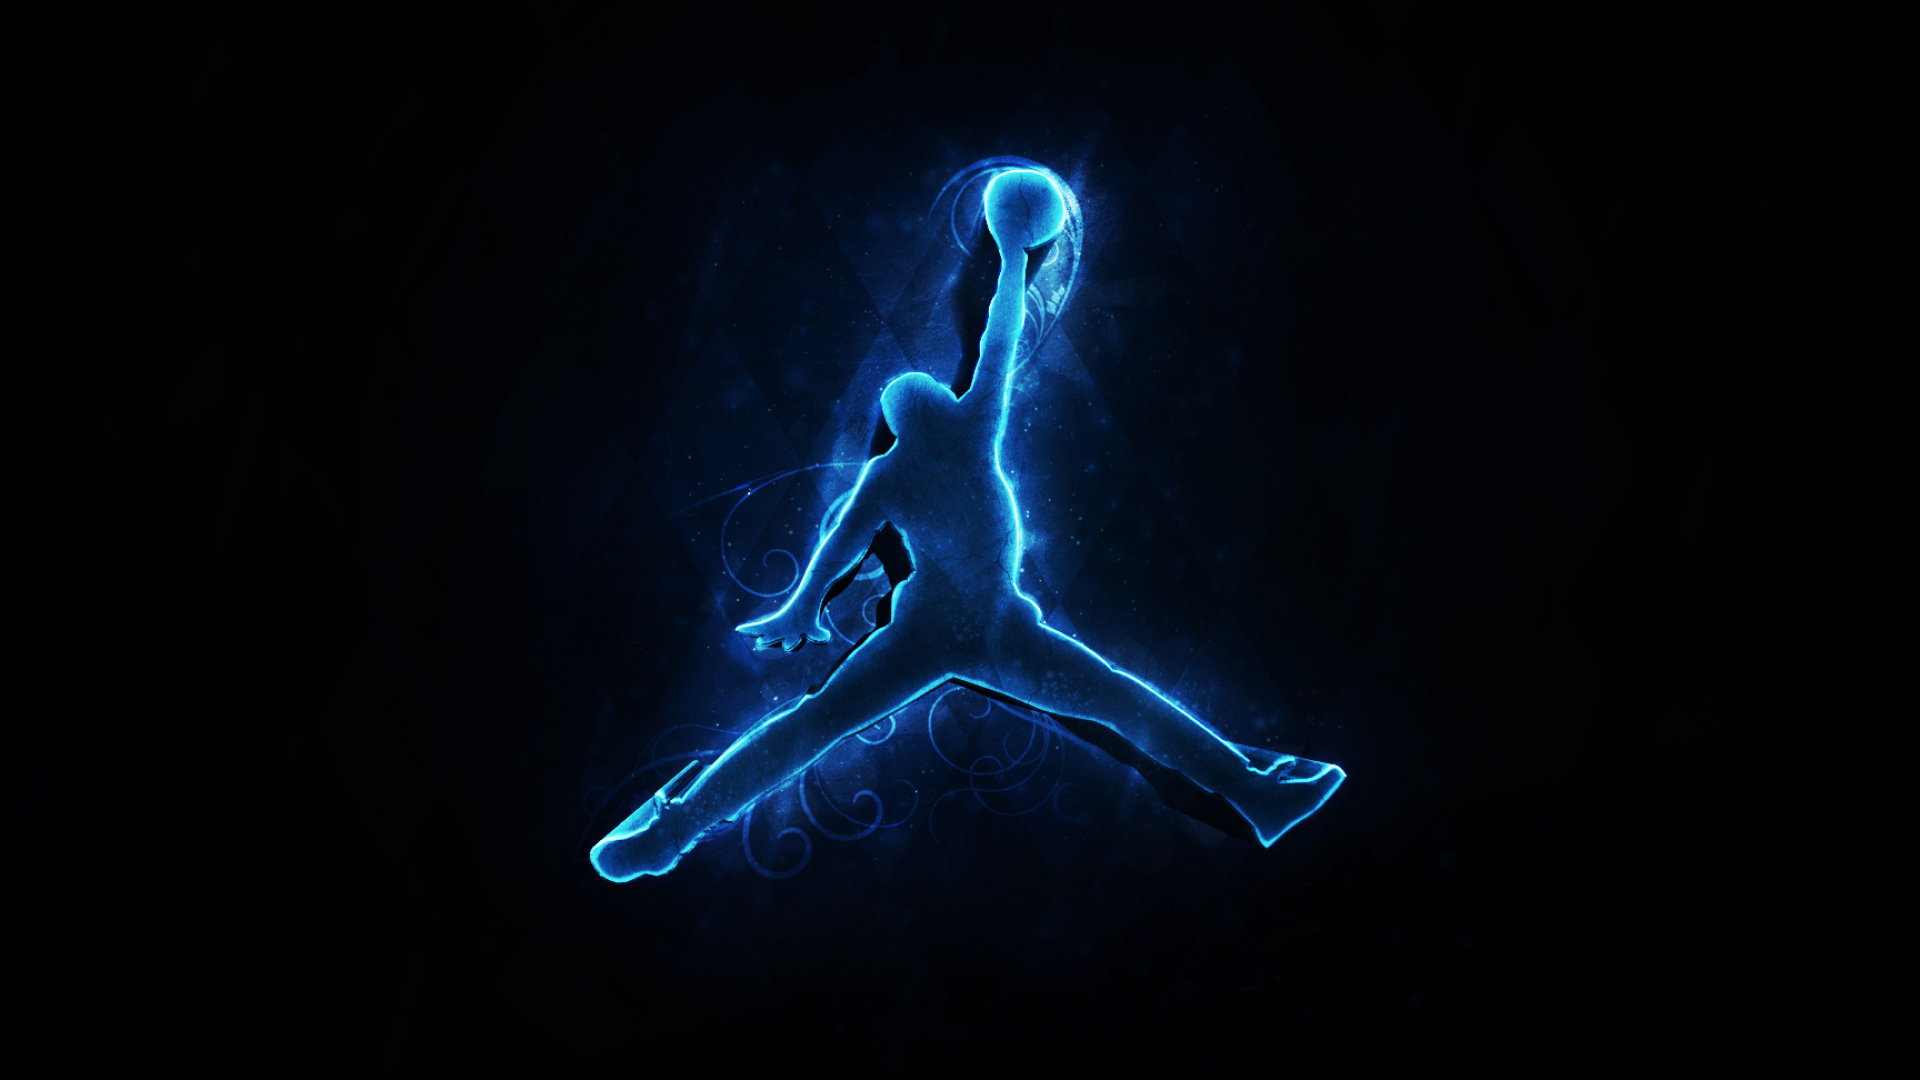 Jumpman Logo, Air Jordan brand, Classic logo, Sneaker enthusiasts, 1920x1080 Full HD Desktop